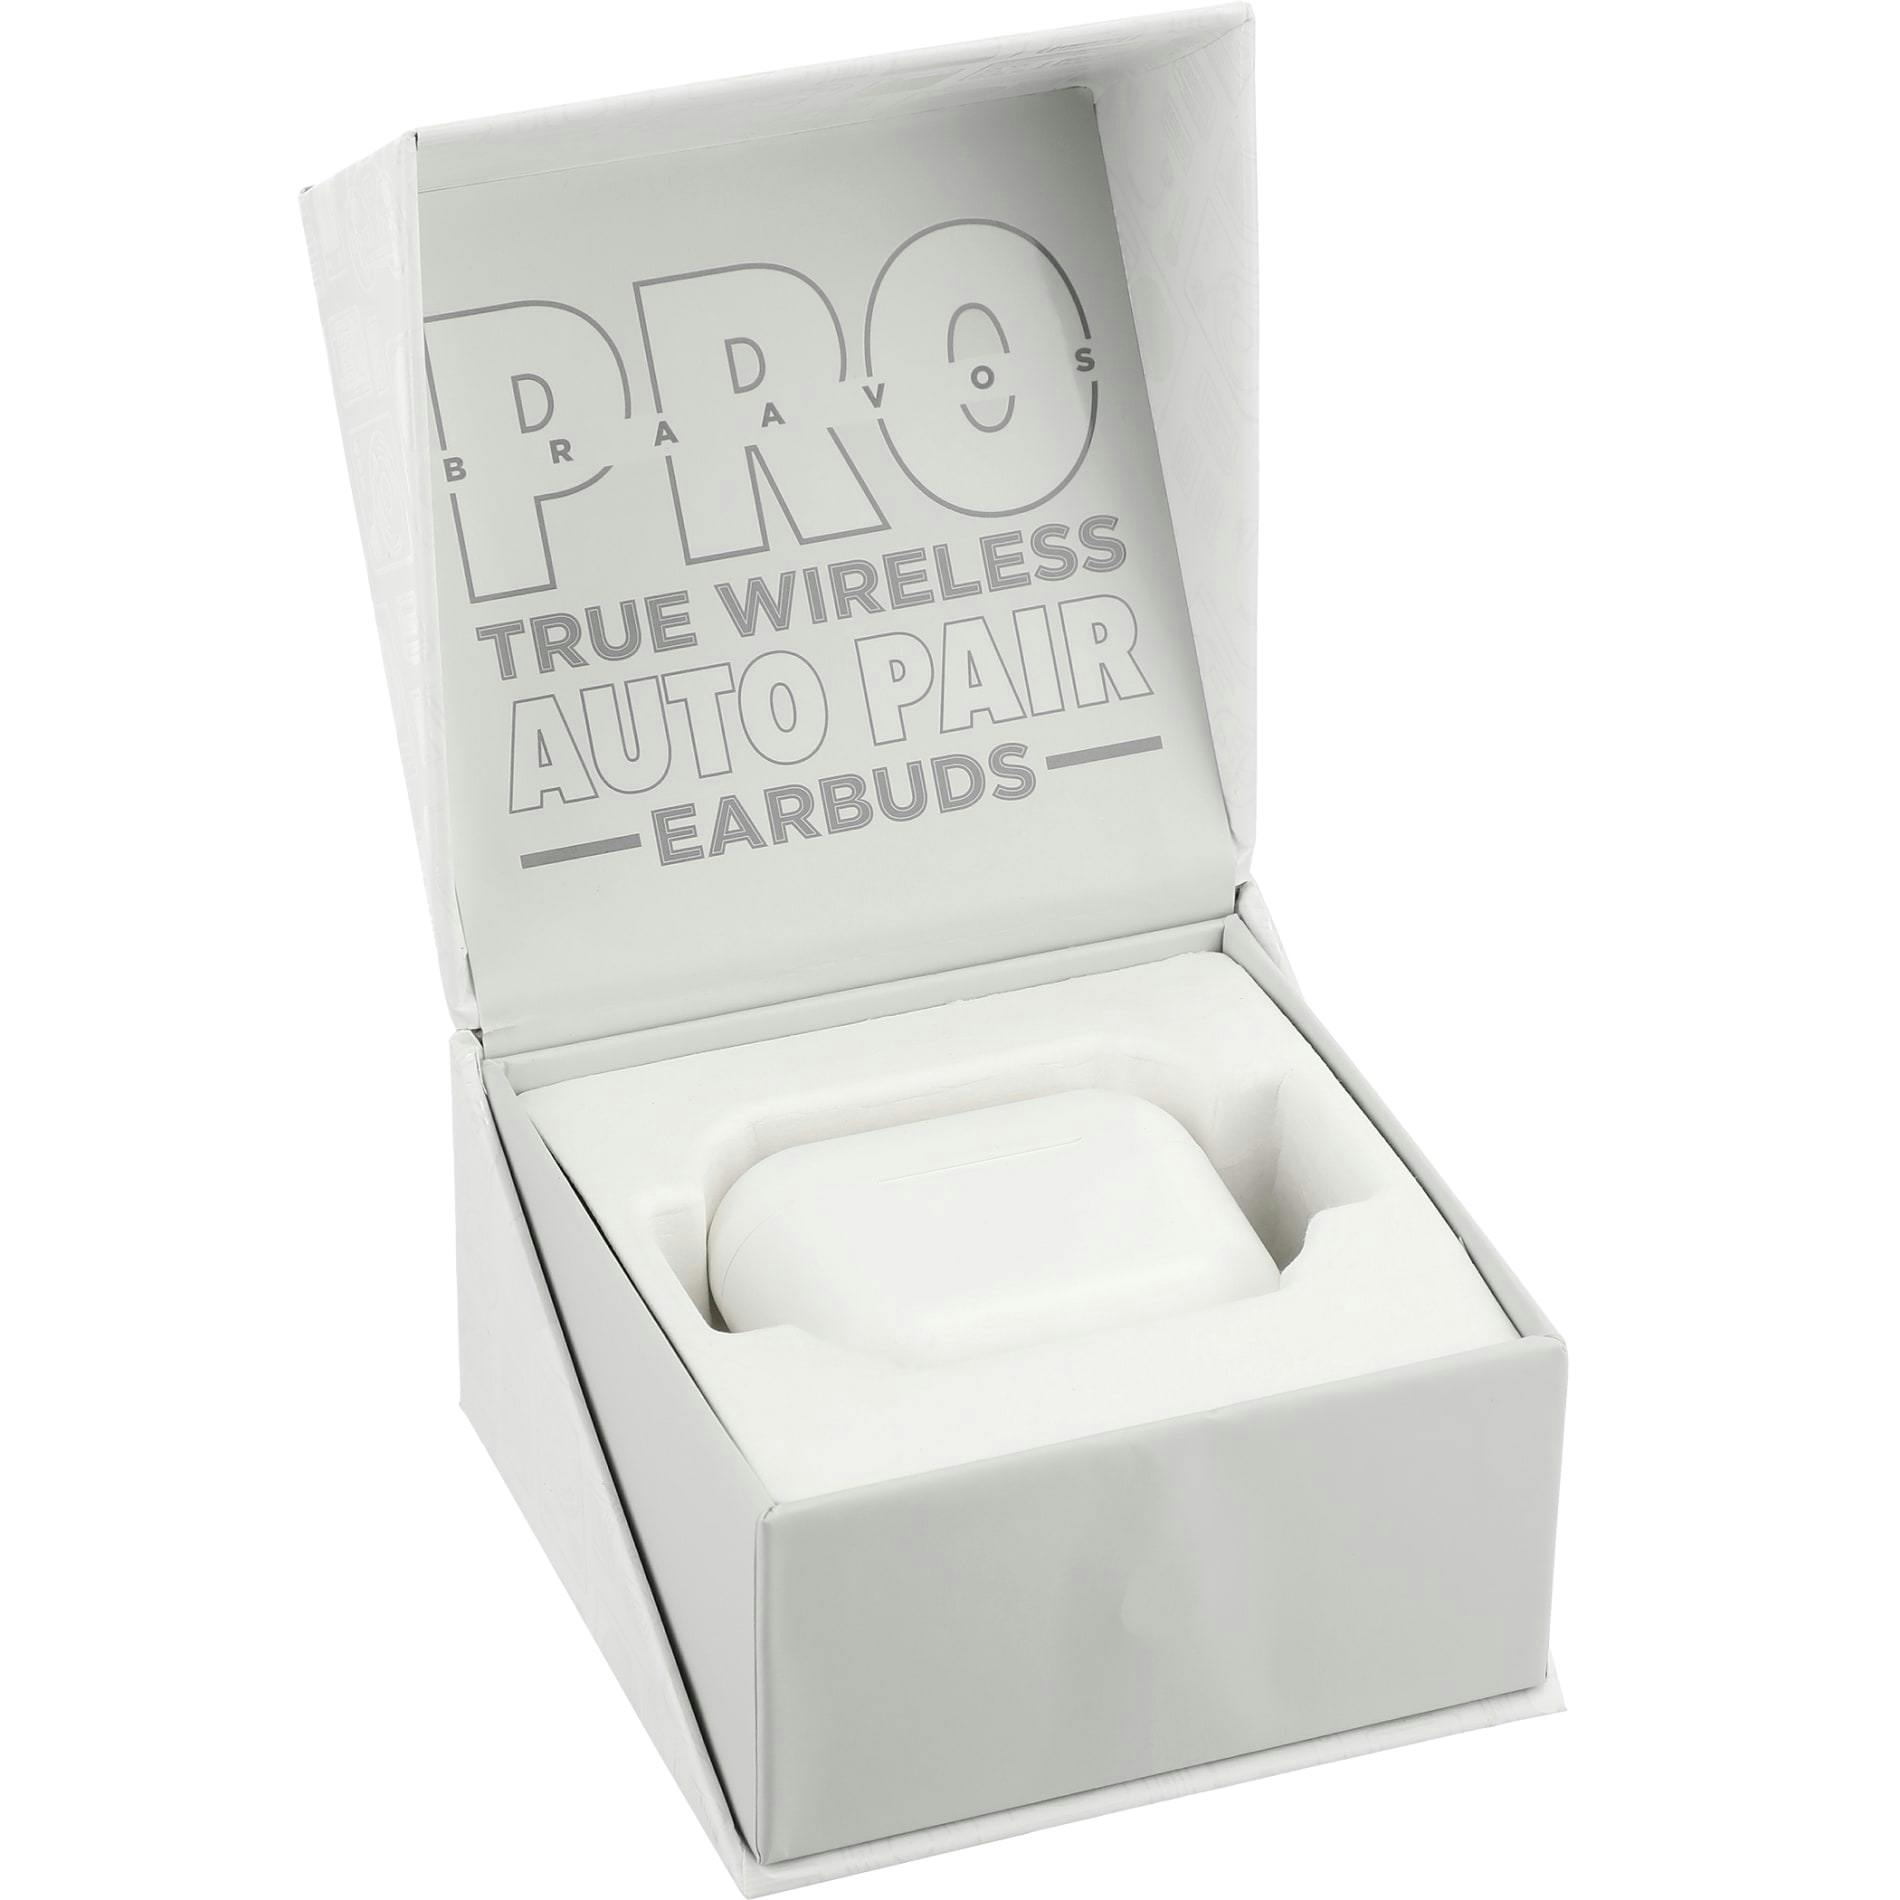 Braavos Pro True Wireless Auto Pair Earbuds - additional Image 1